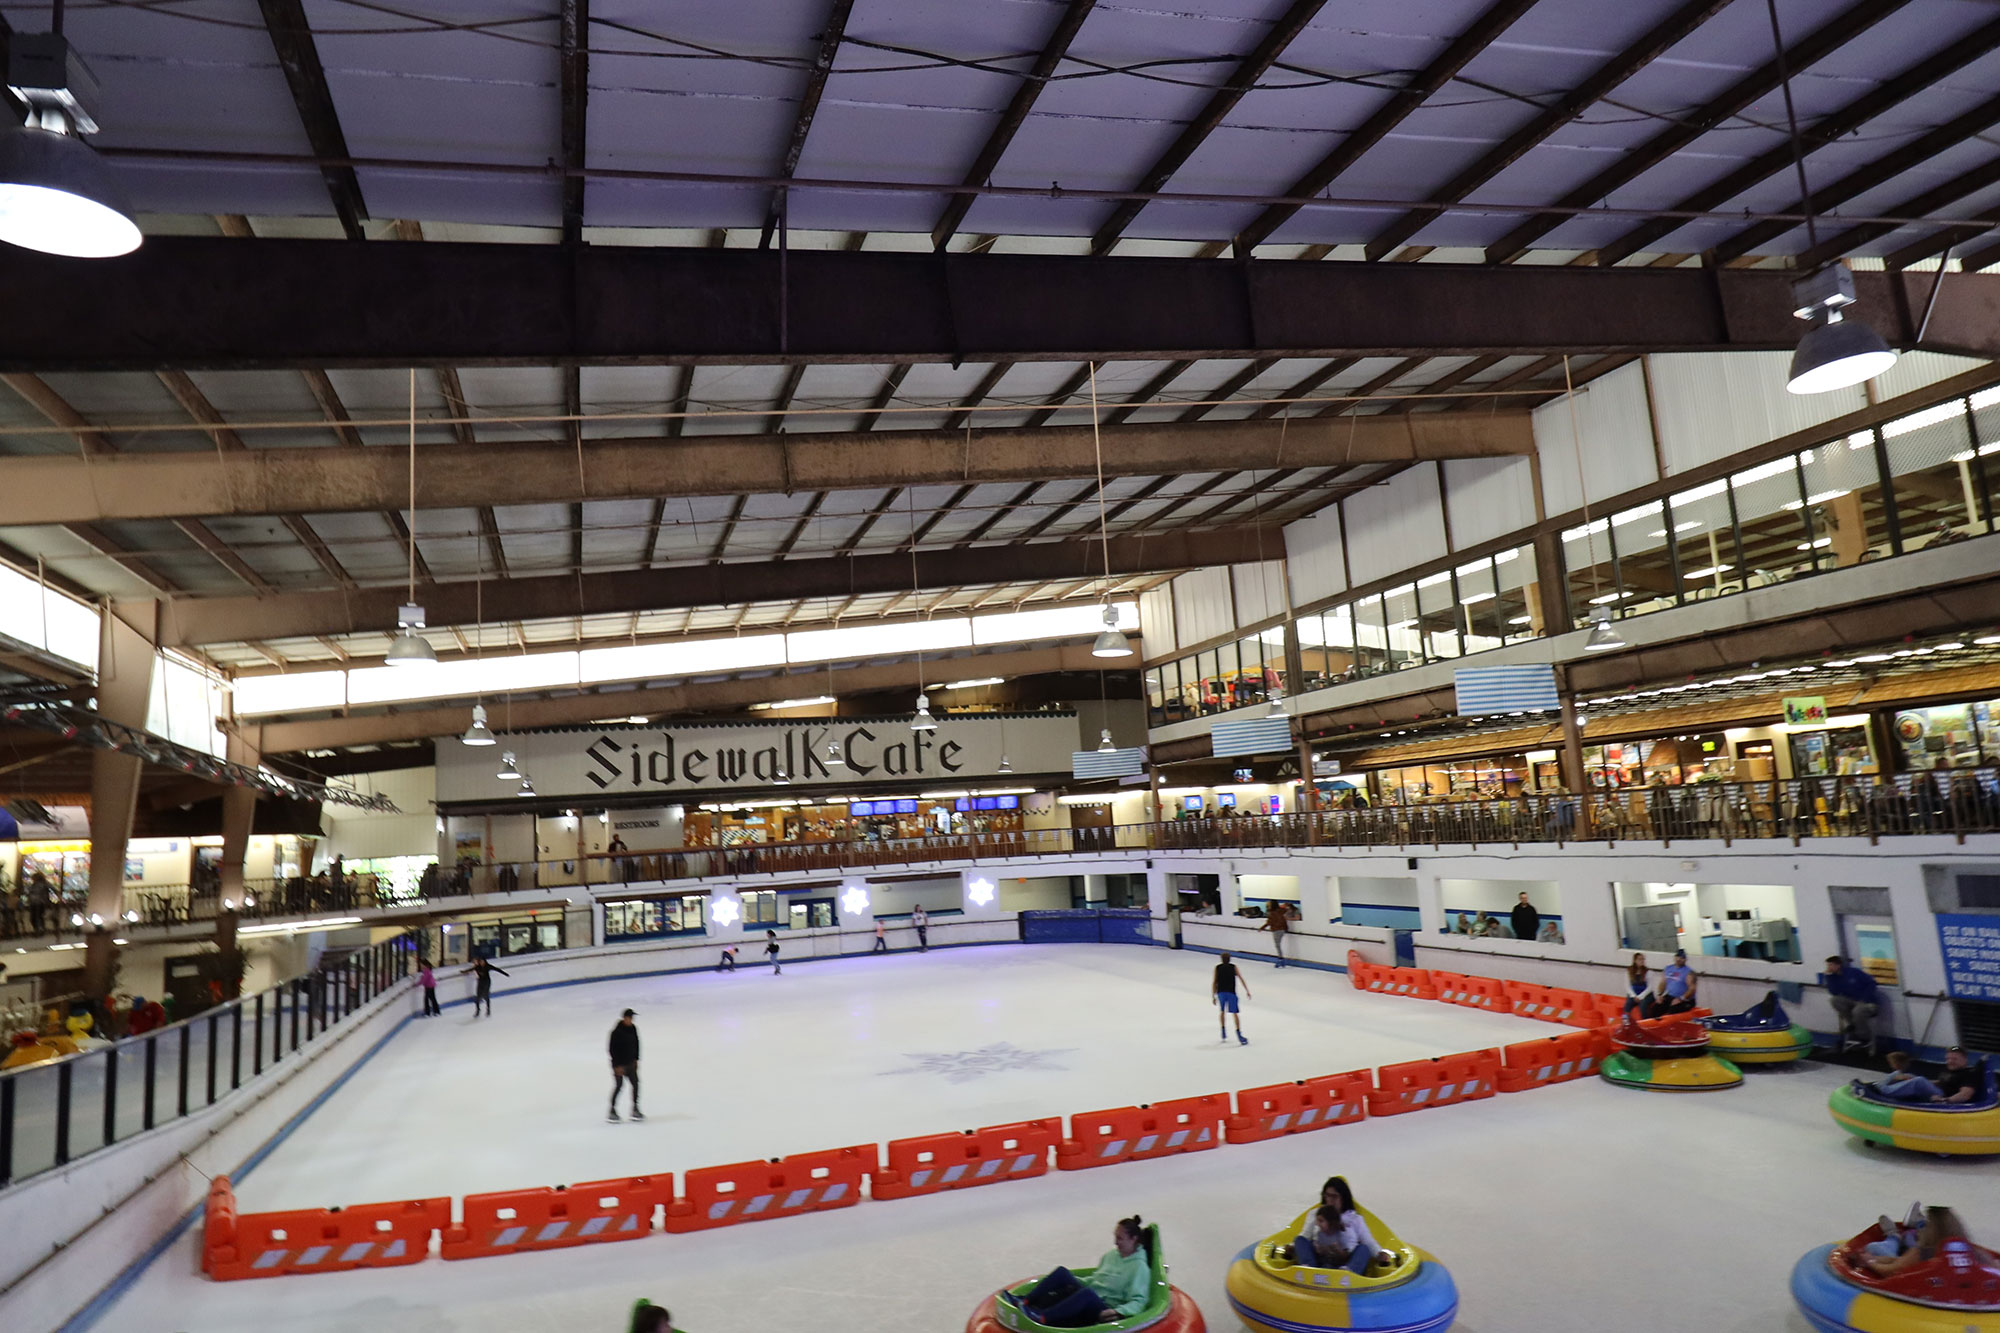 Ober Gatlinburg ice skating rink